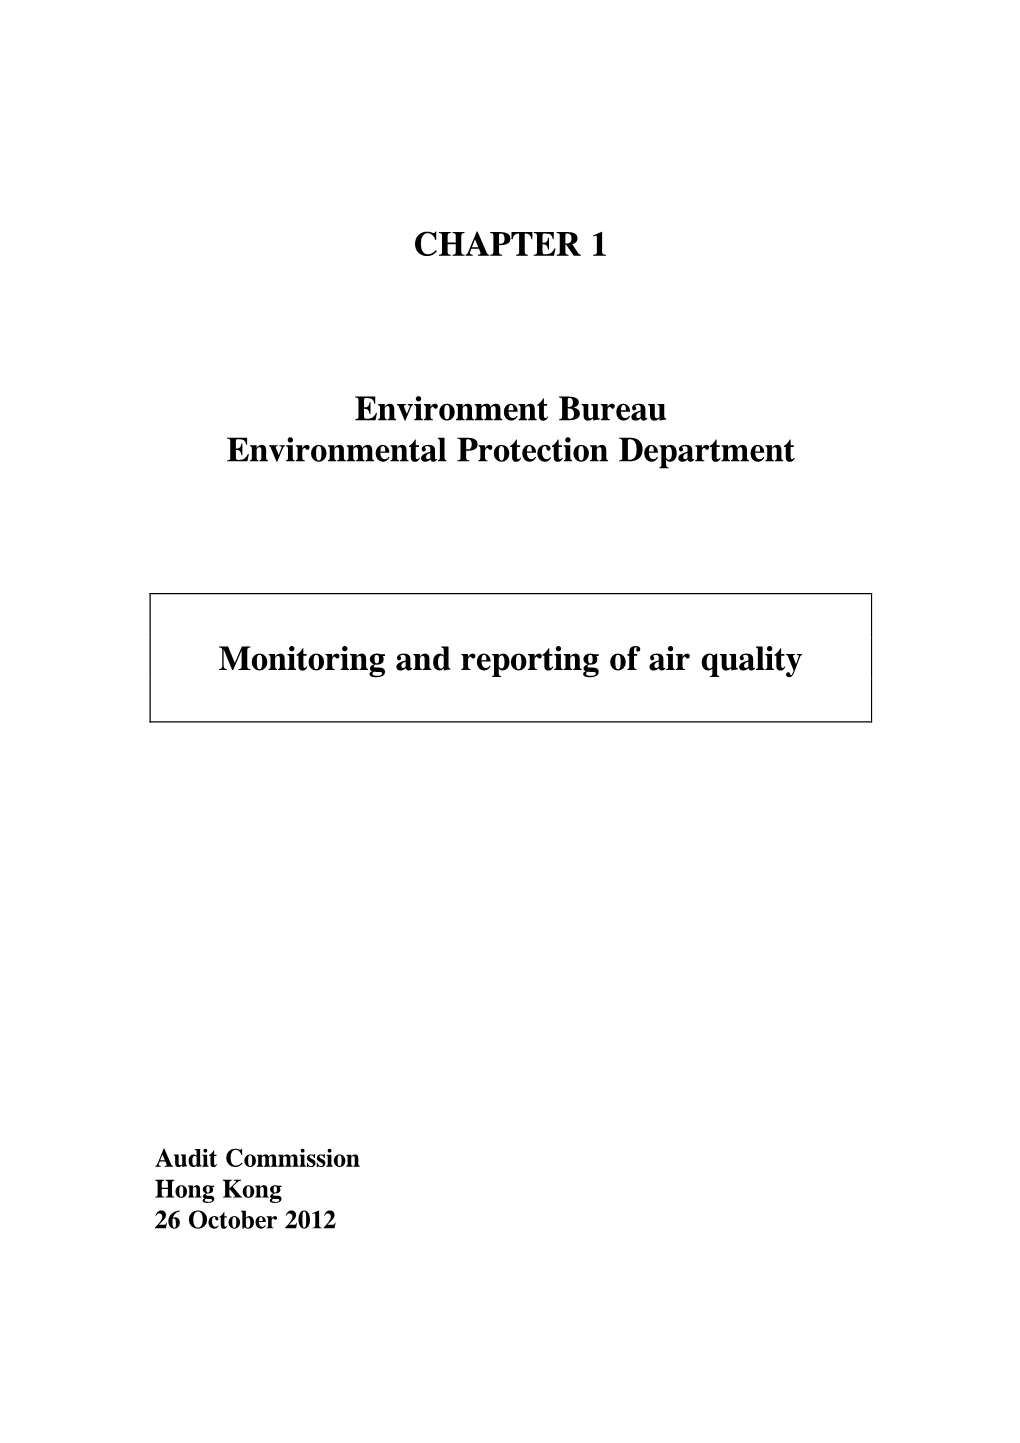 CHAPTER 1 Environment Bureau Environmental Protection